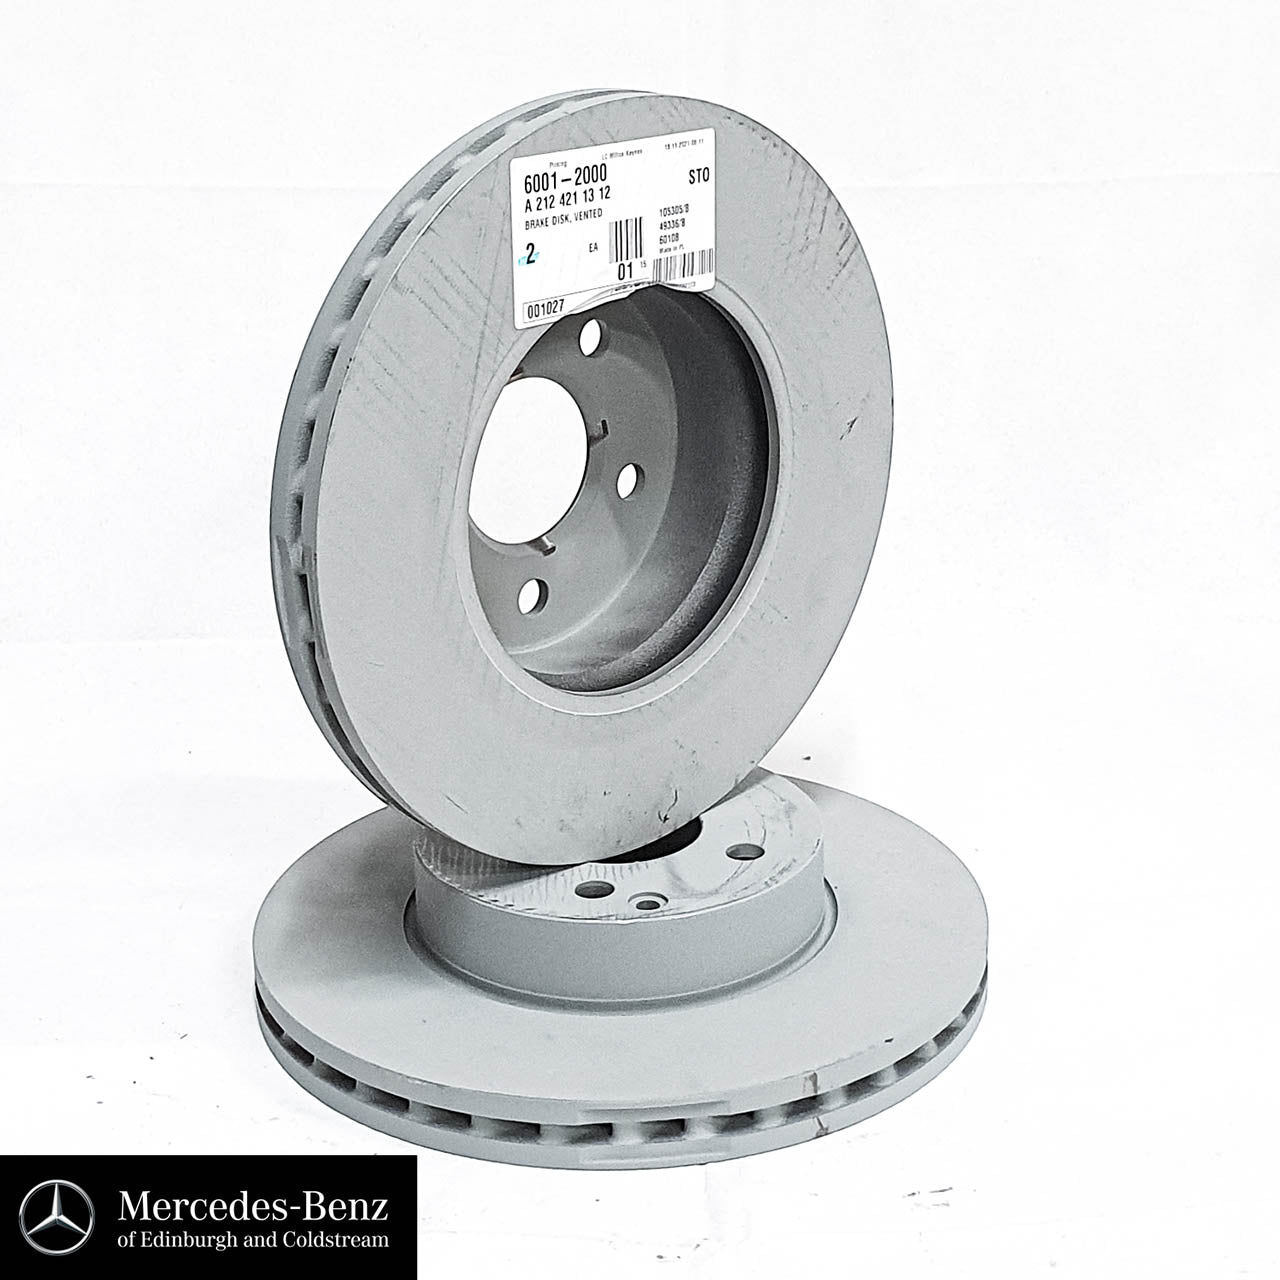 Genuine Mercedes-Benz brake disc set - Front - E Class 212 models